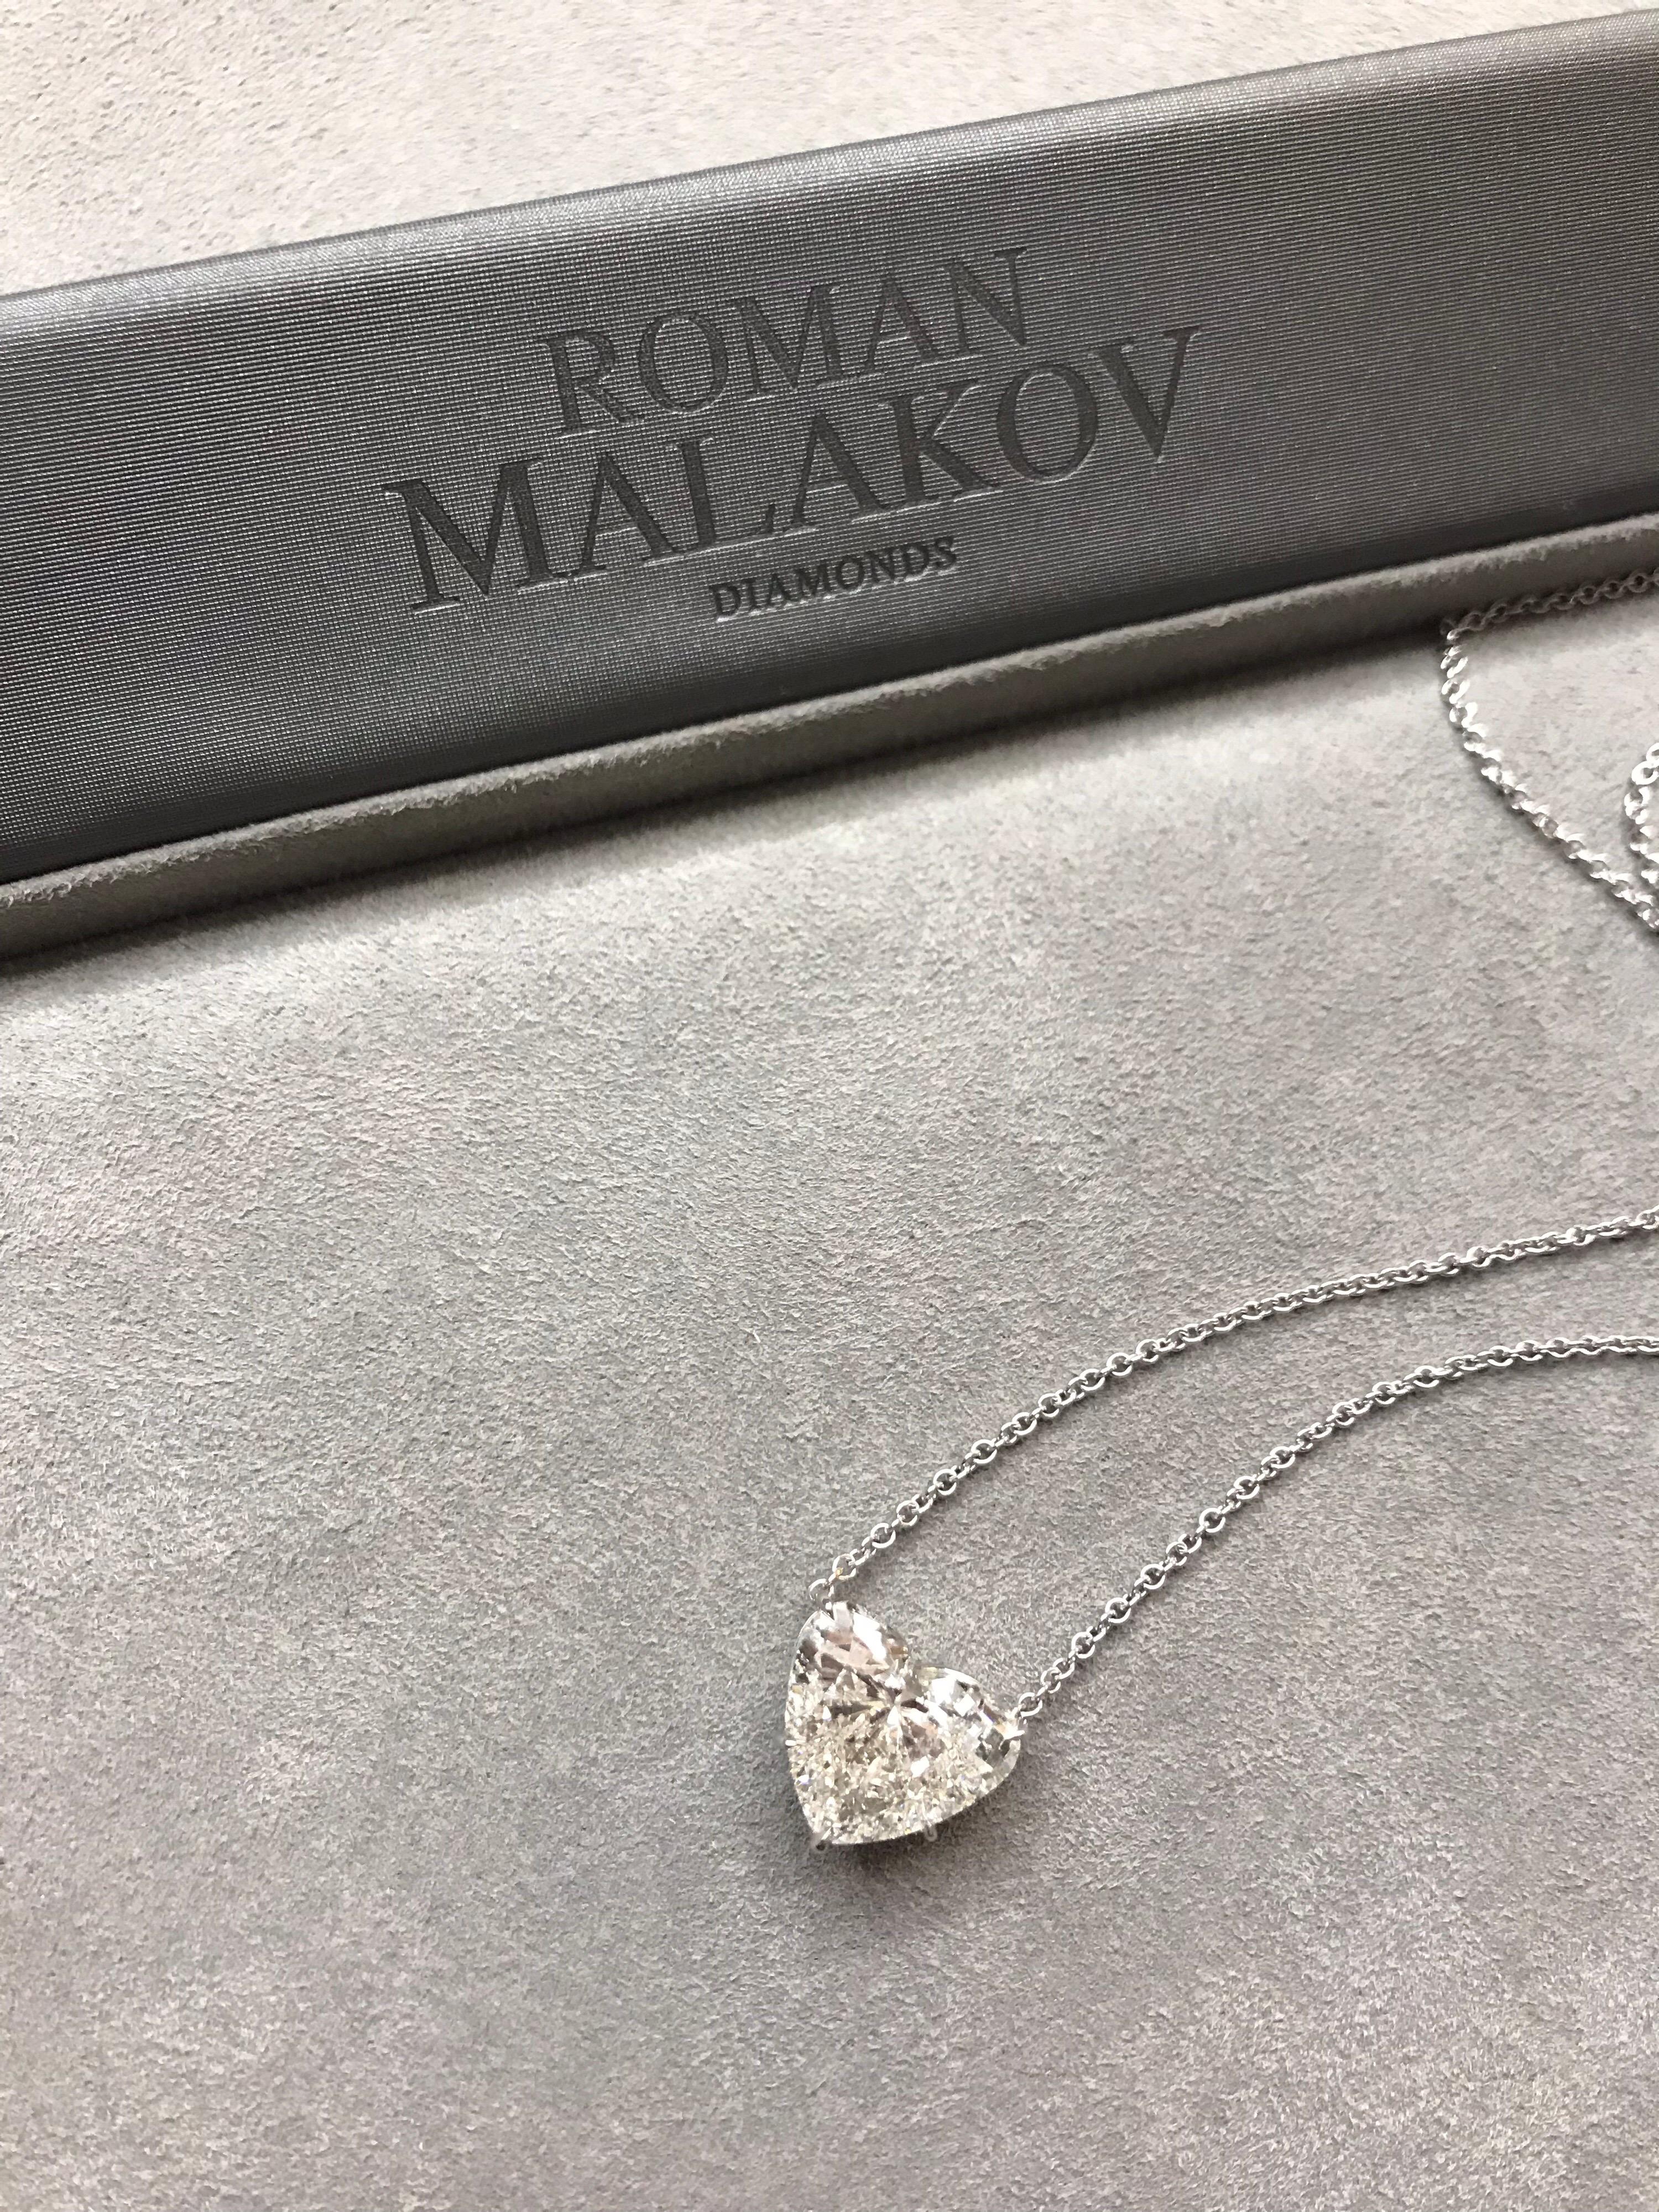 Women's Roman Malakov 7.05 Carat Total Heart Shape Diamond Pendant Necklace For Sale